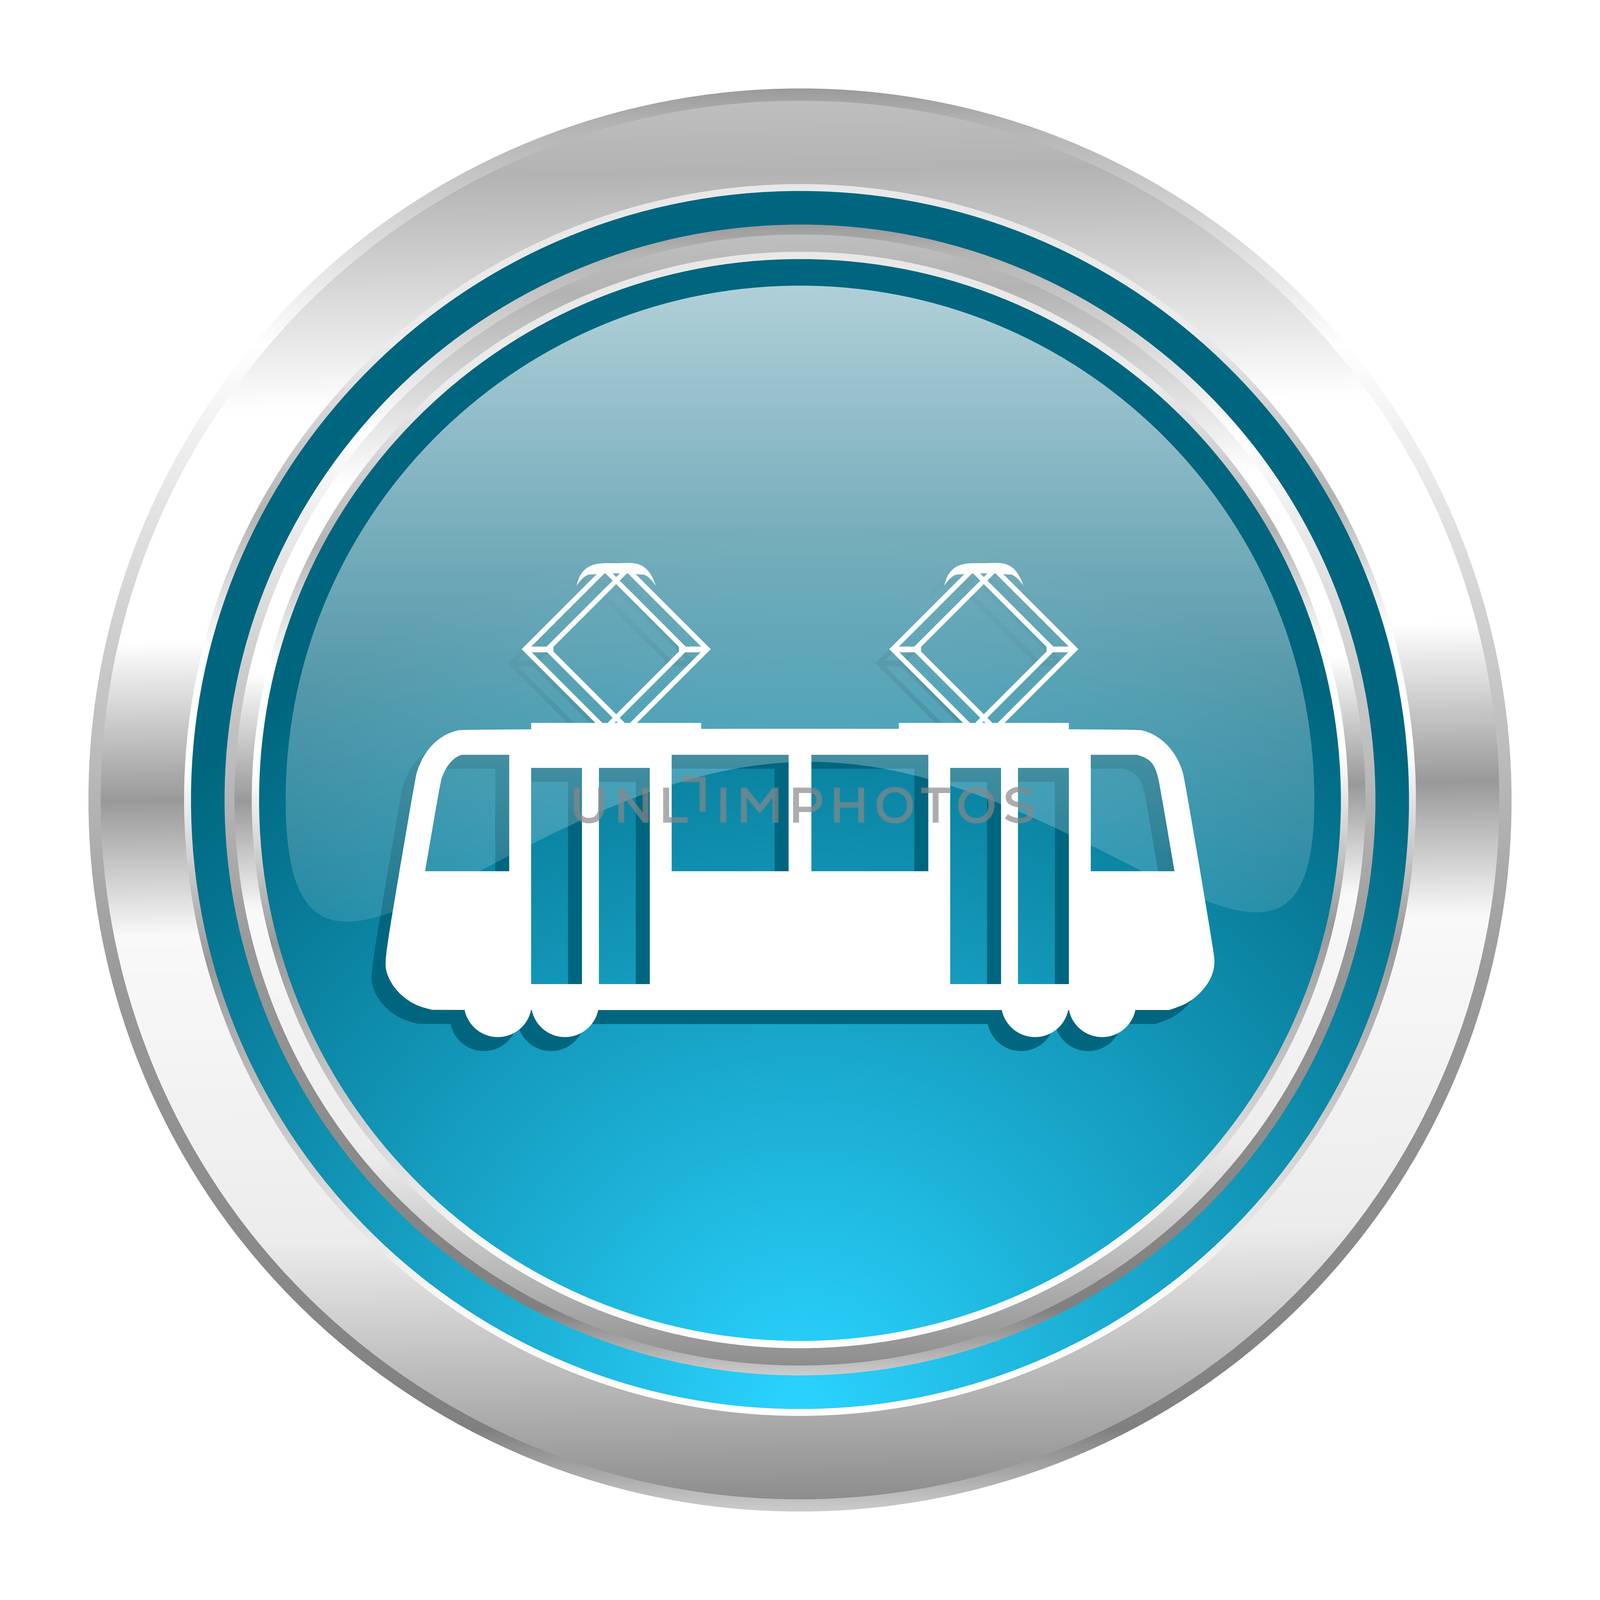 tram icon, public transport sign by alexwhite